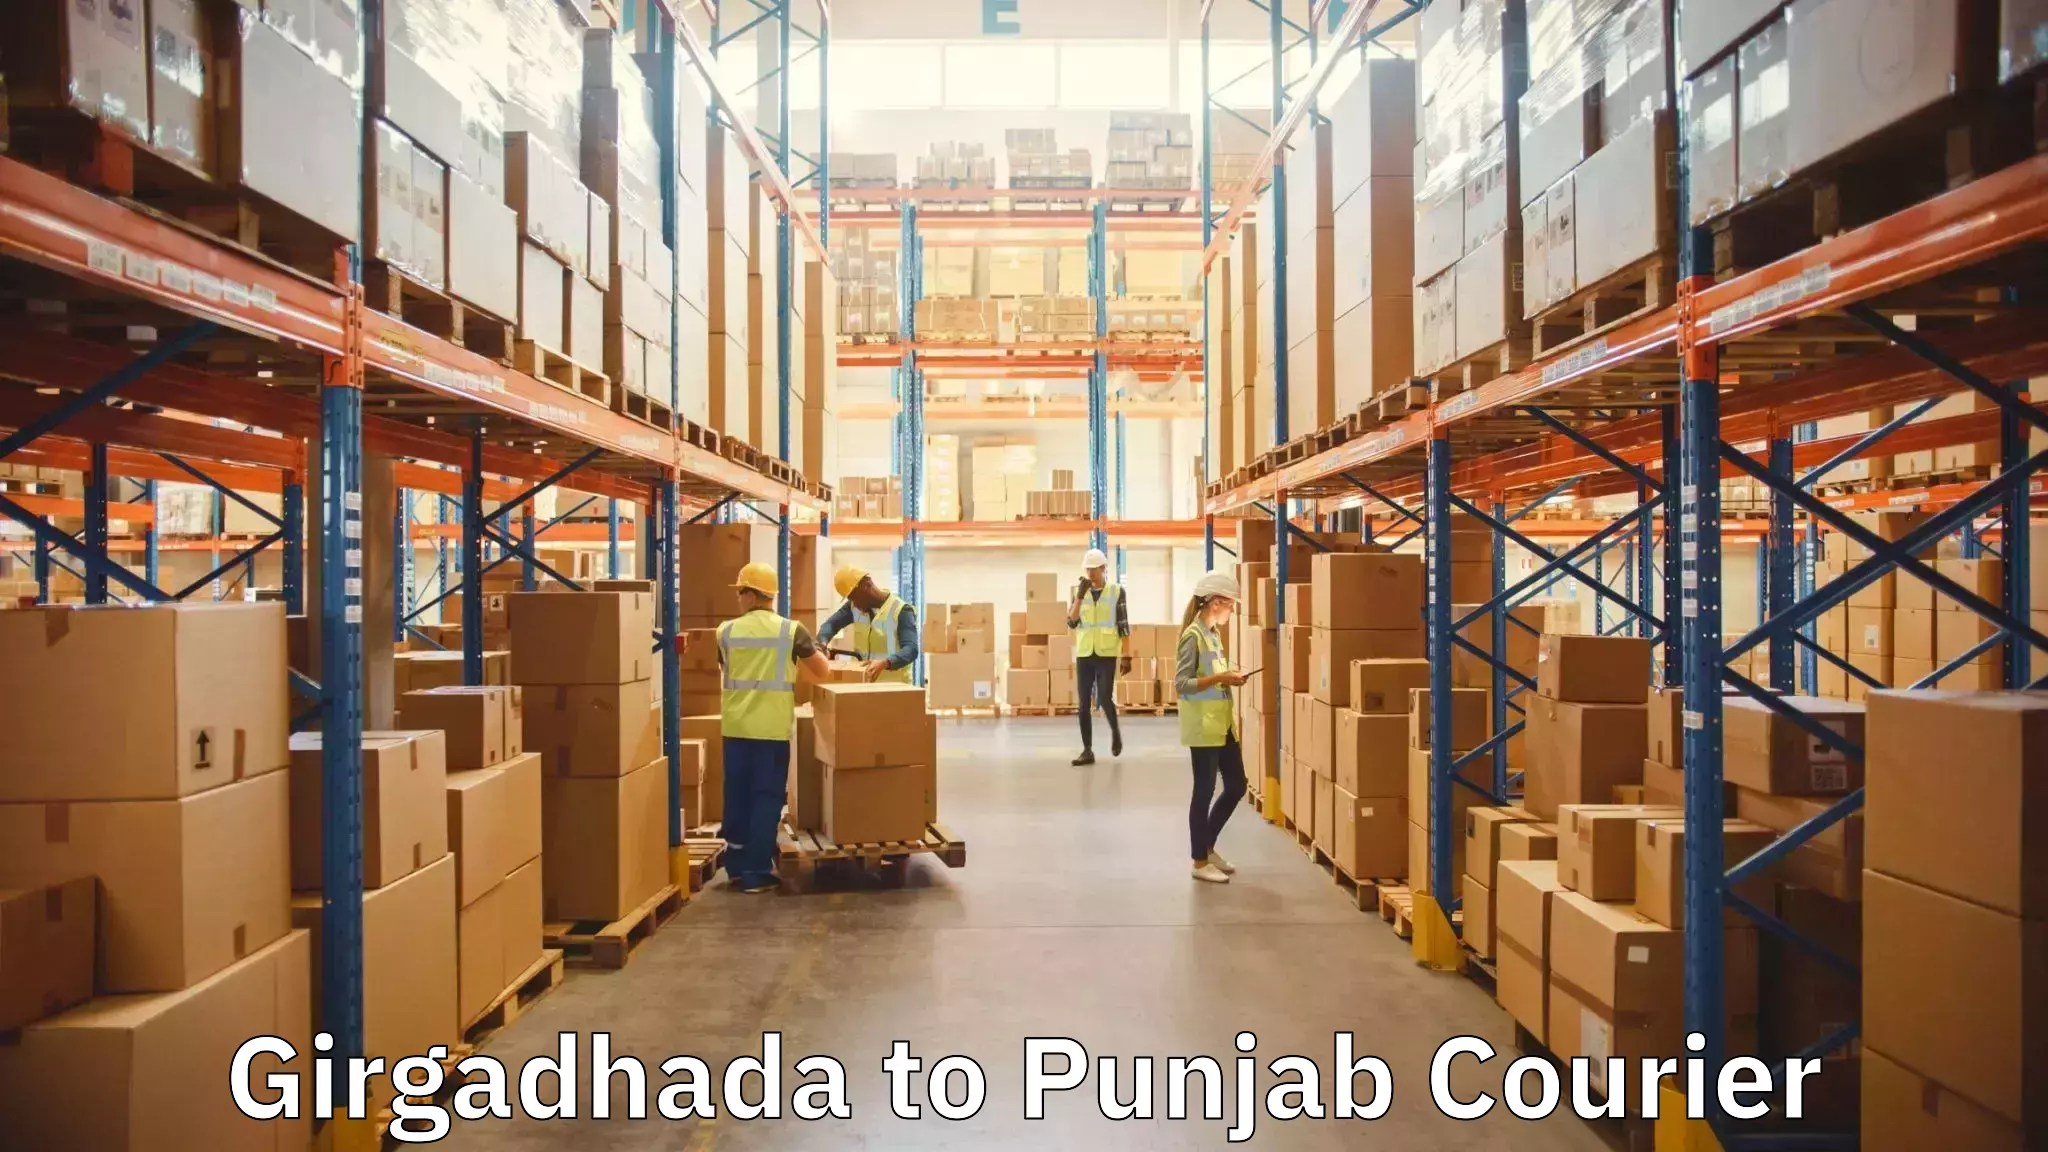 Professional home movers Girgadhada to Punjab